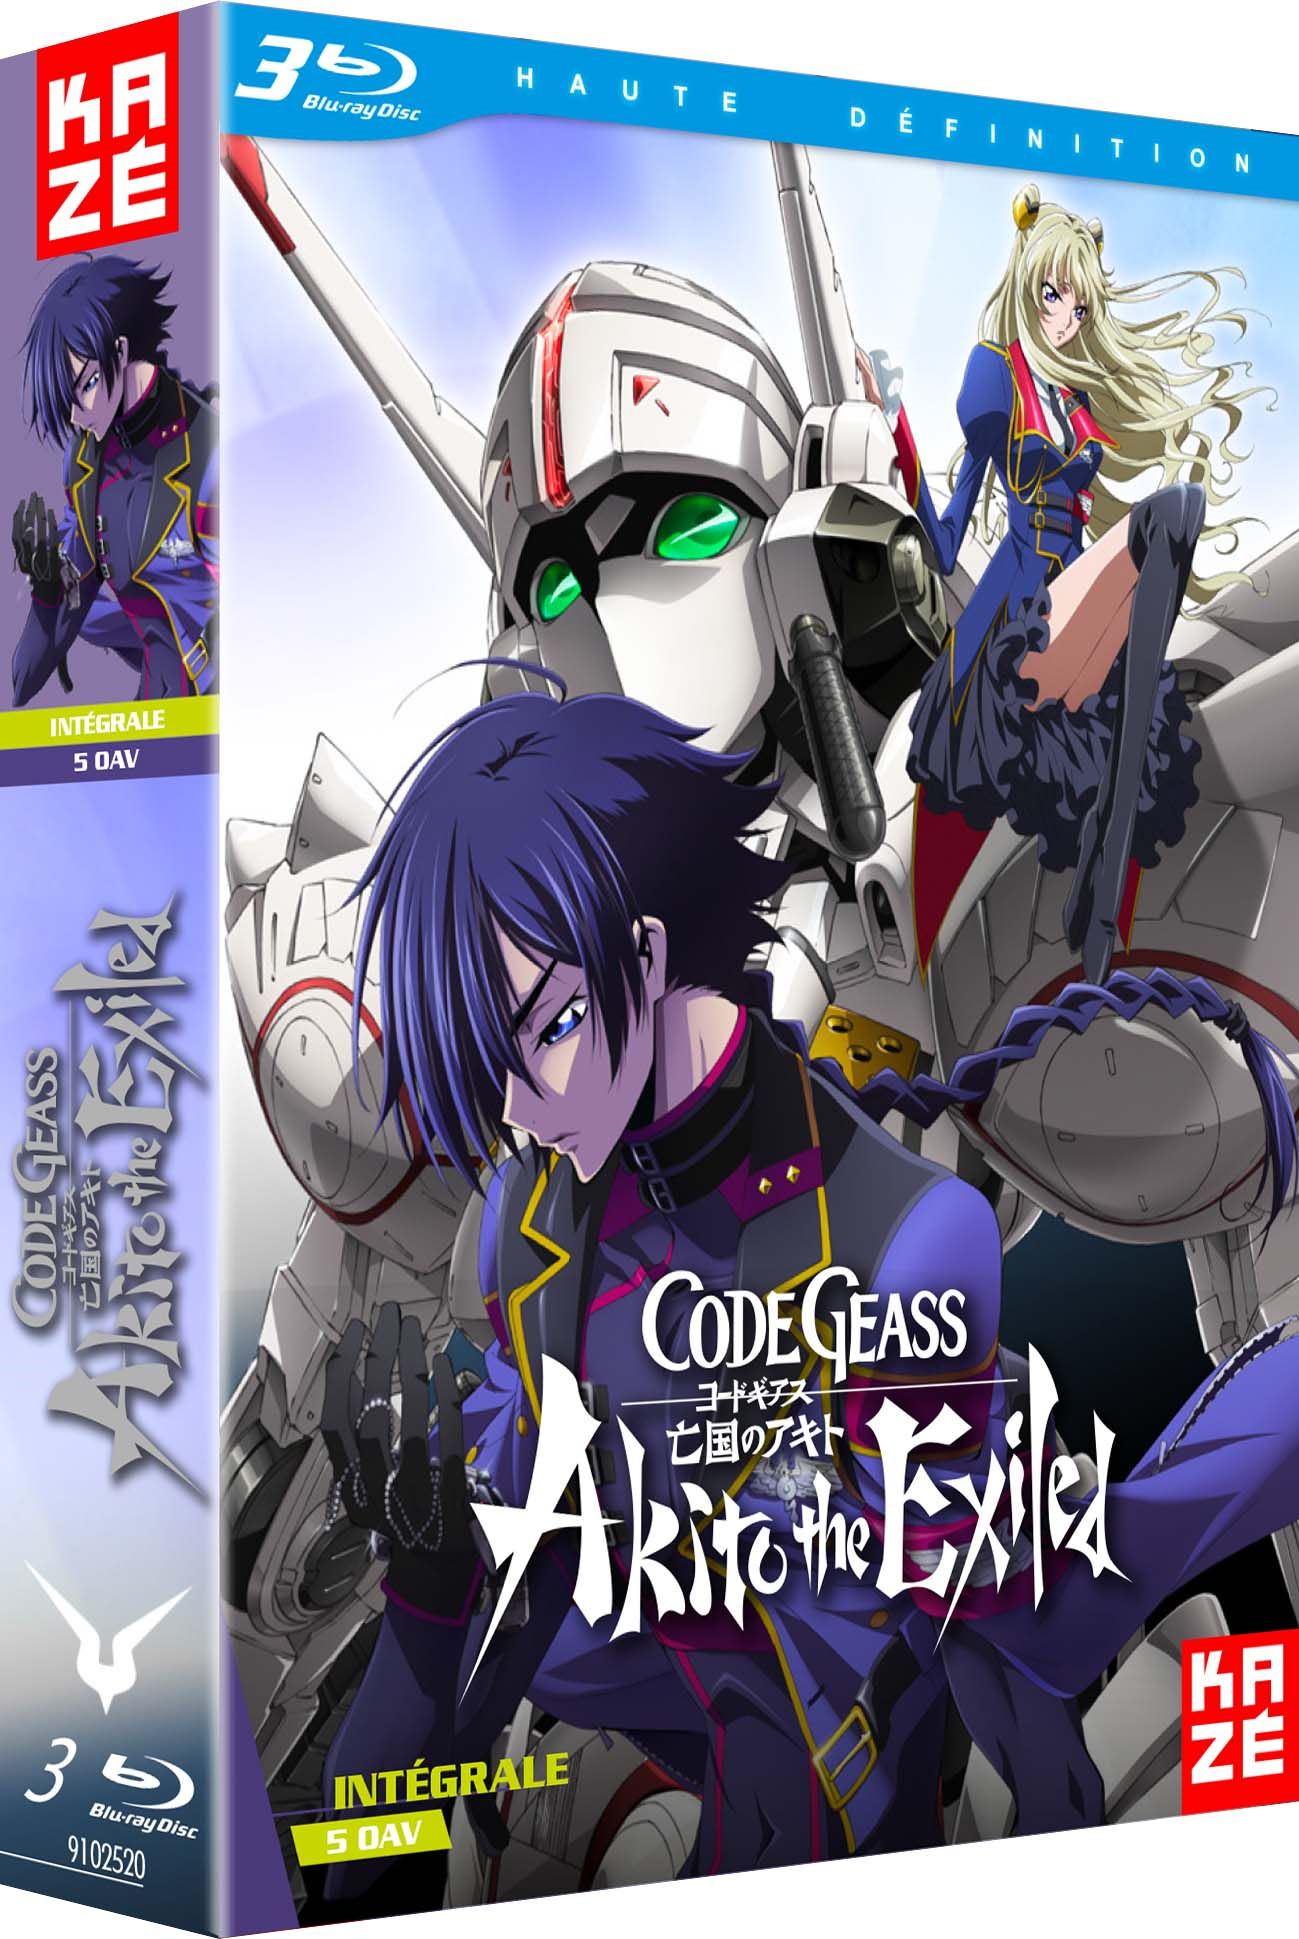 Code Geass - Akito - Intégrale 5 OAV Bluray